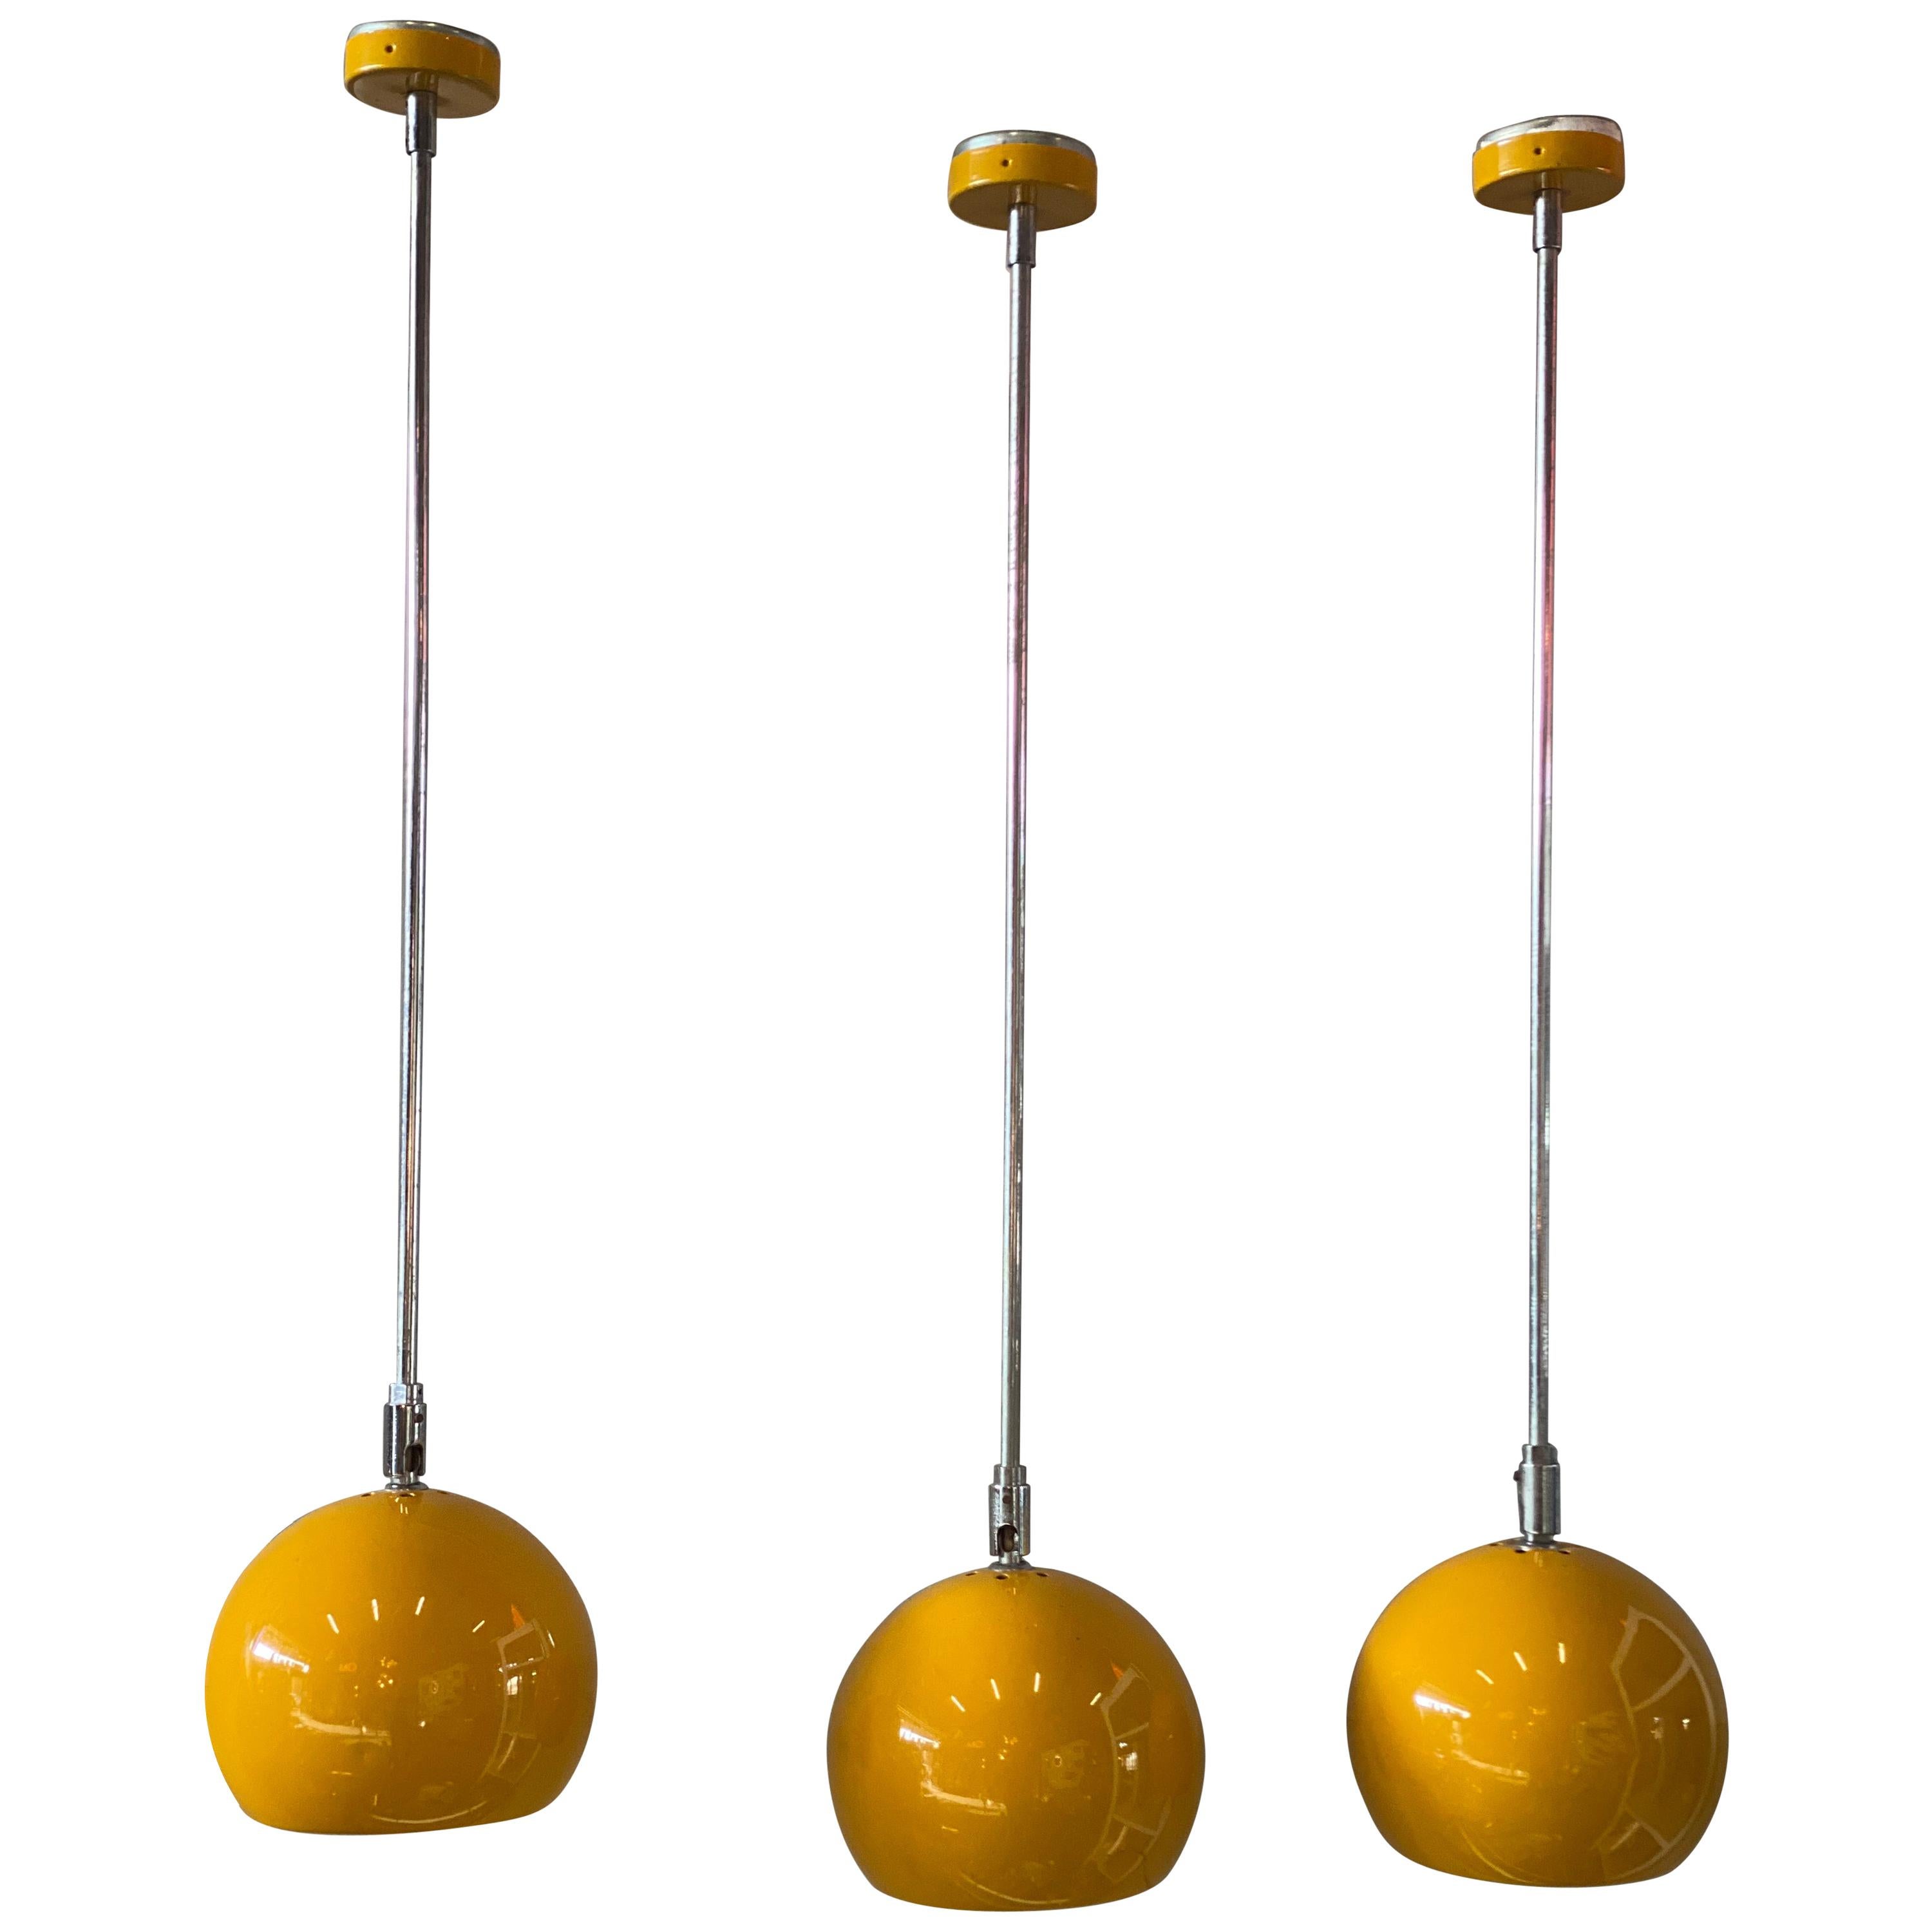 Set of Yellow Pendant Lamps / Spots, Space Age, 1970s Design, Panton Style